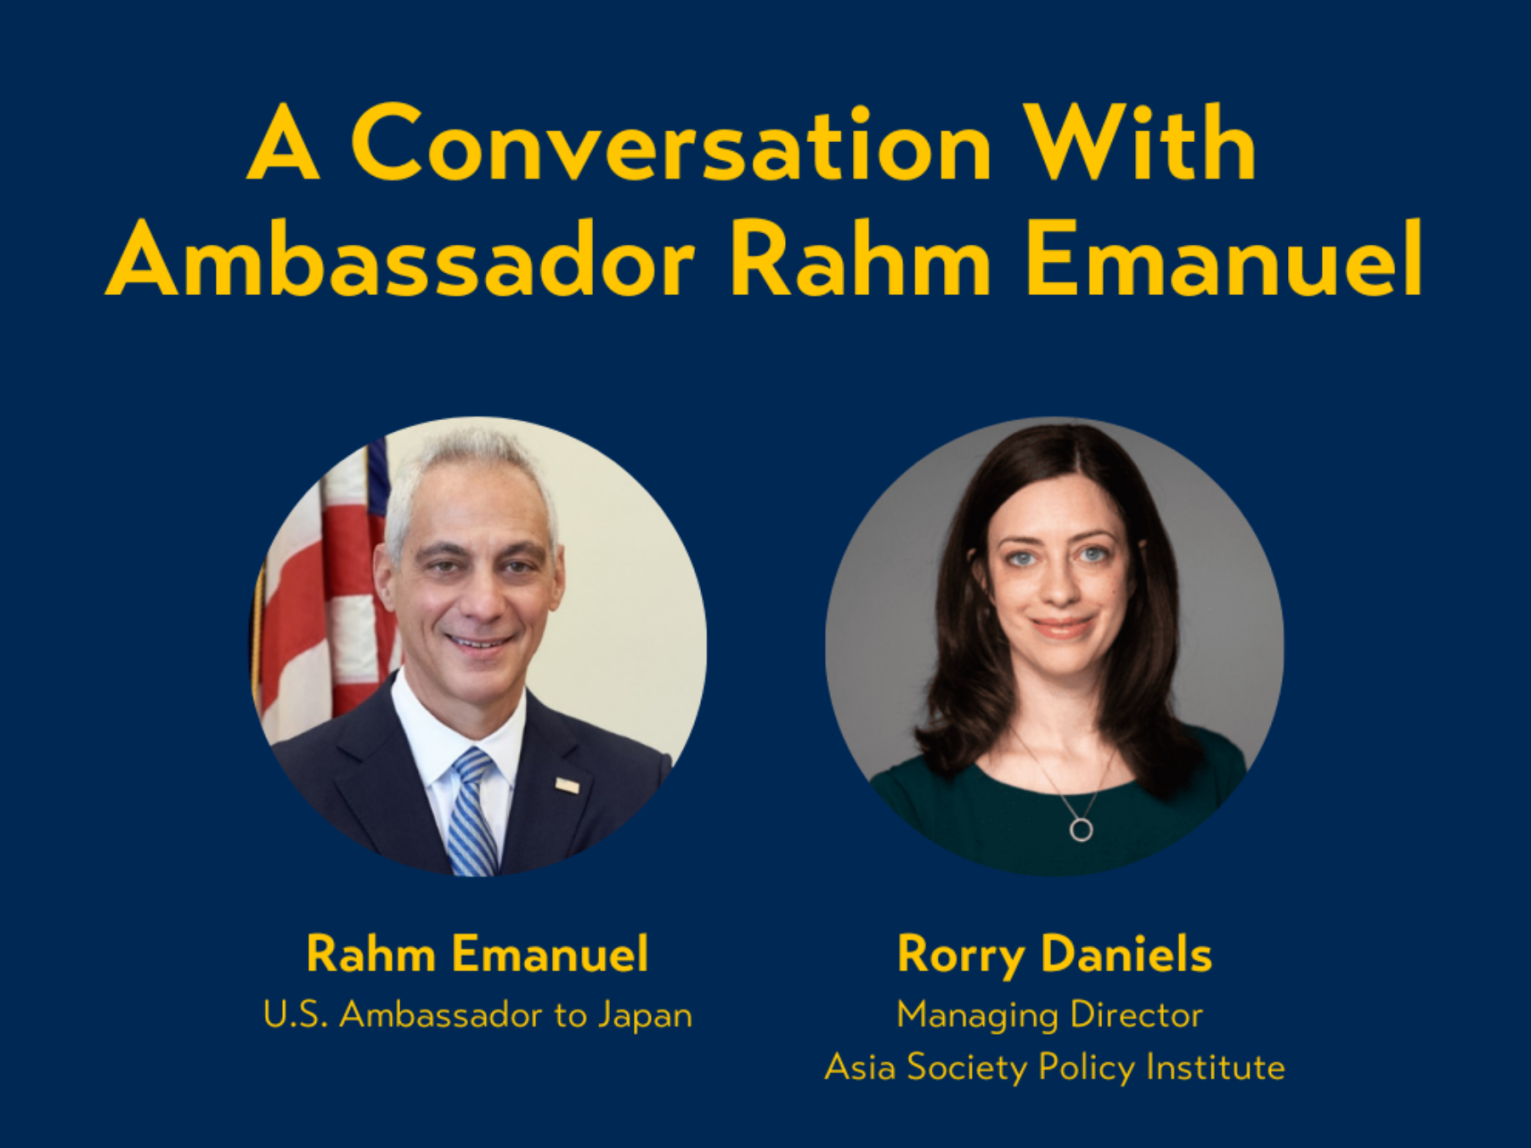 A Conversation with Rahm Emanuel, U.S. Ambassador to Japan